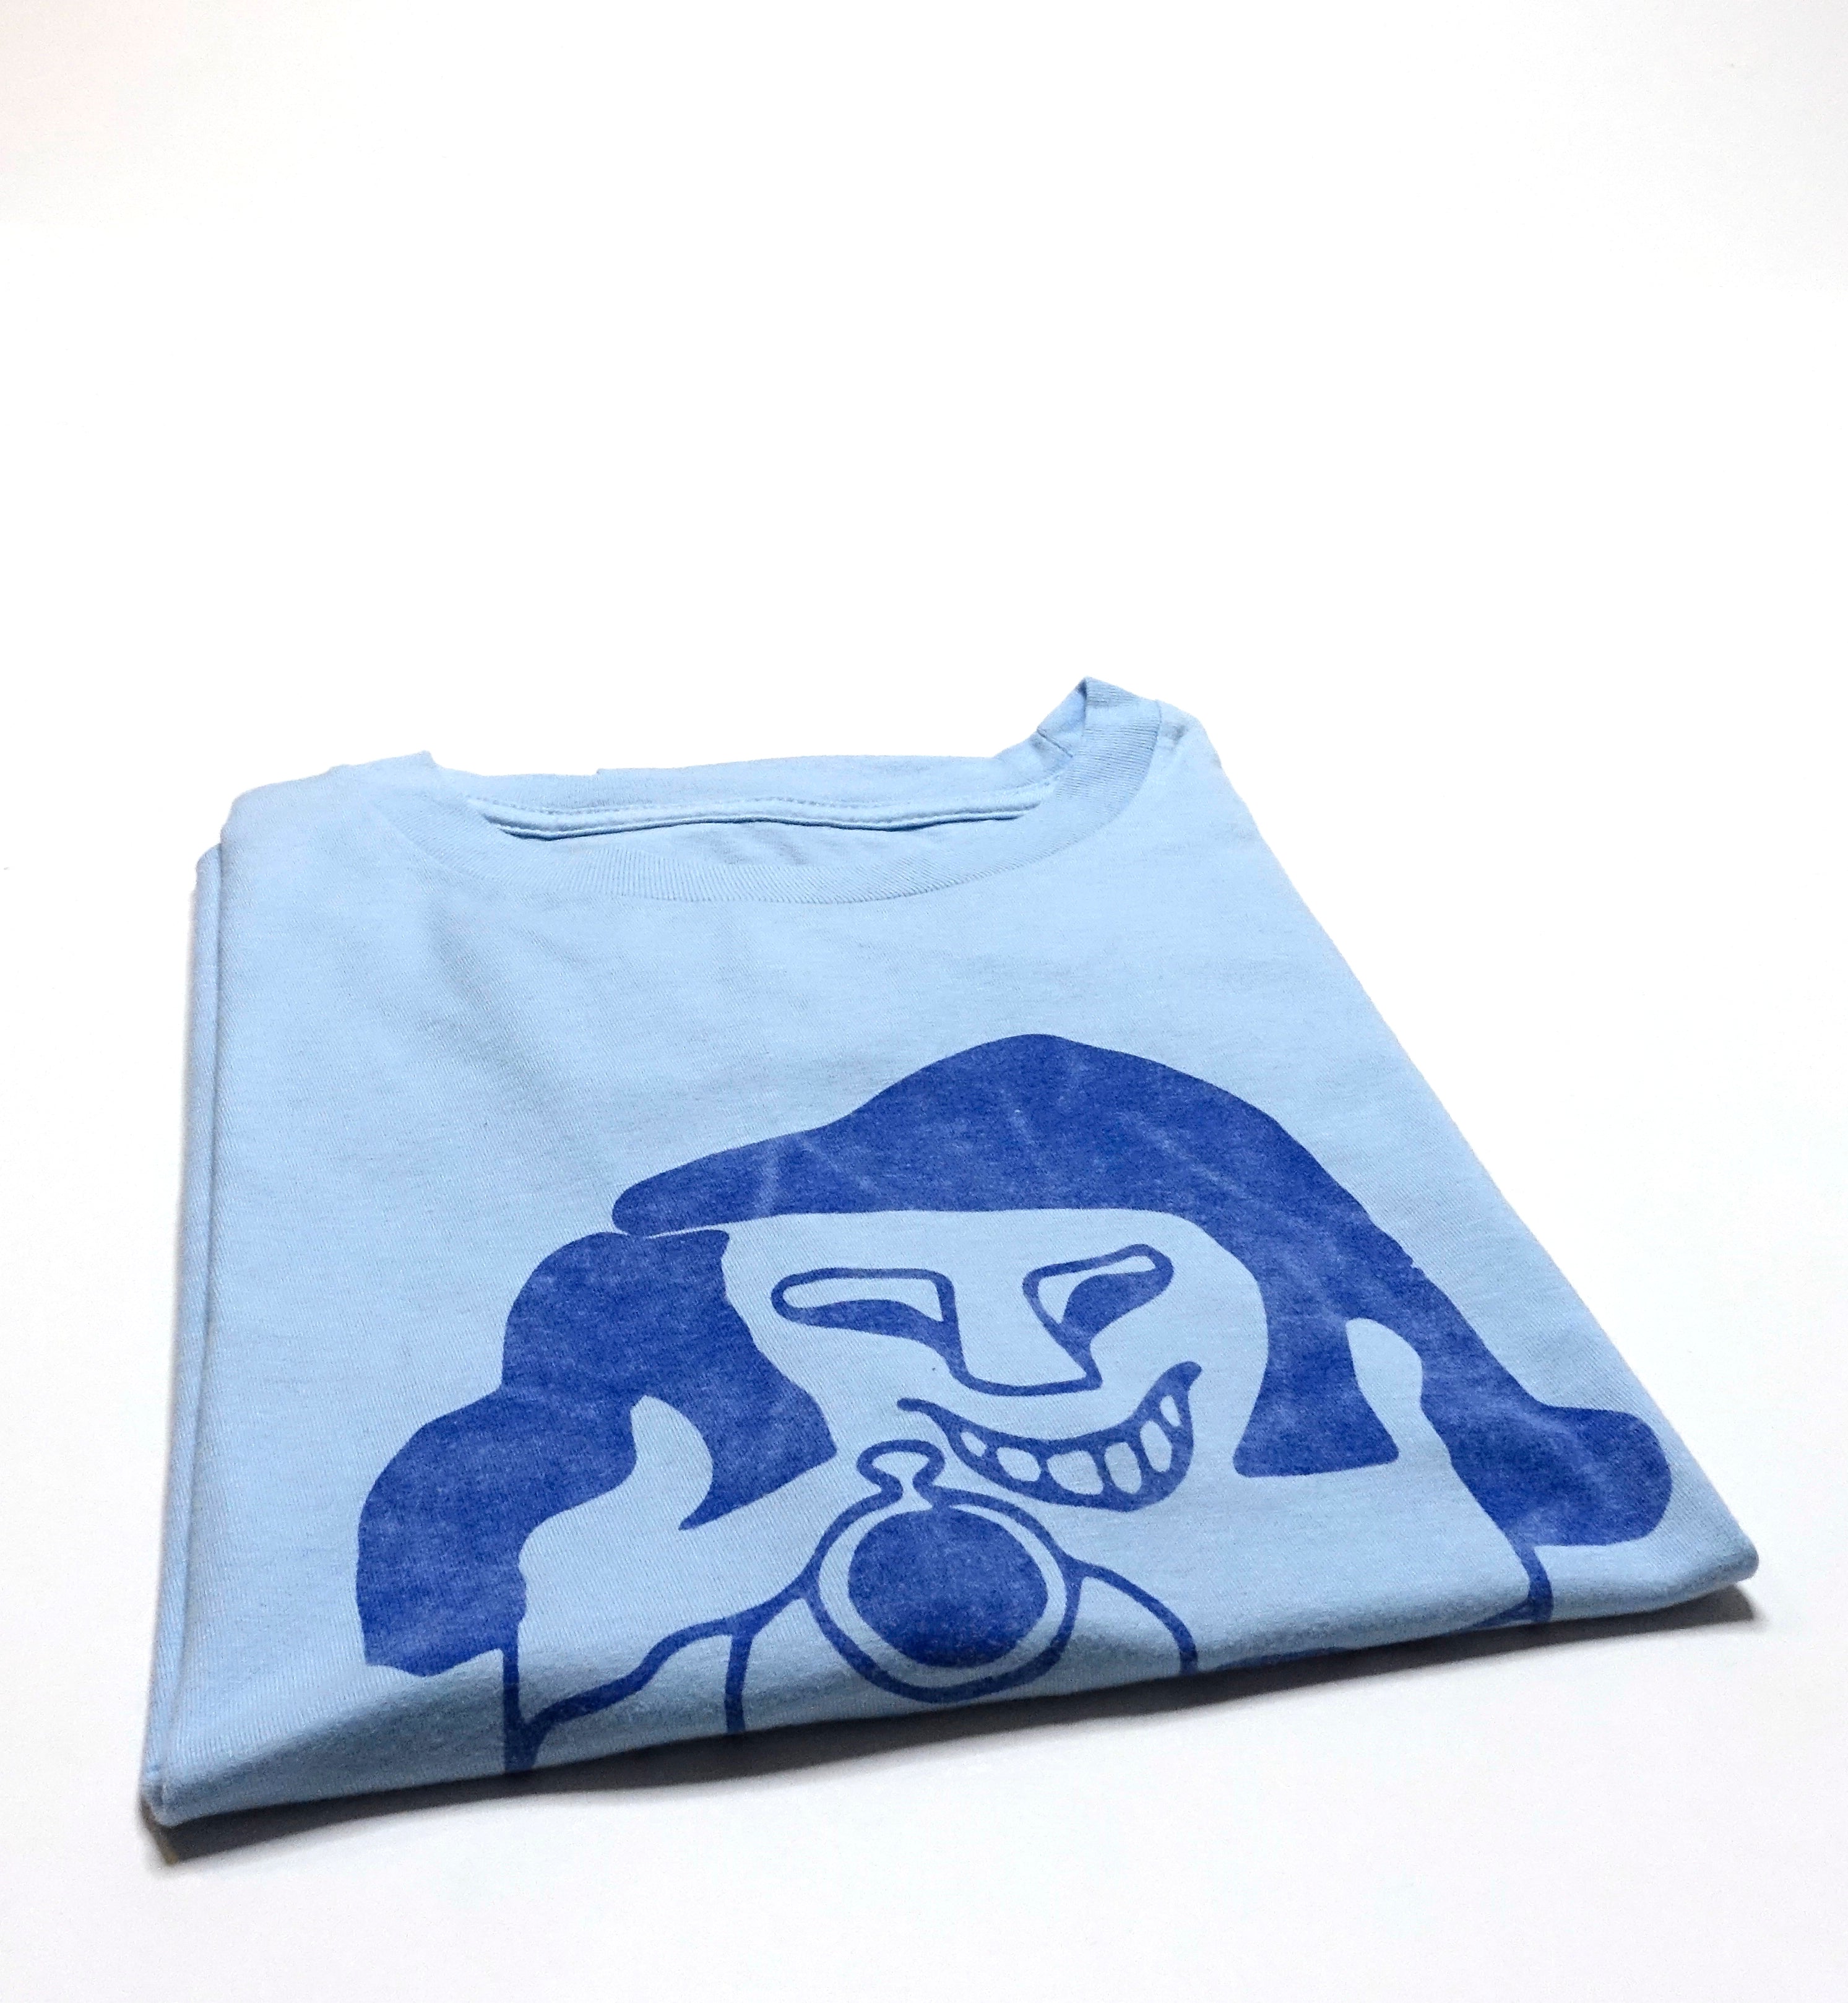 Stereolab – Cliff 00's Tour Shirt Size Large (Blue/Blue)